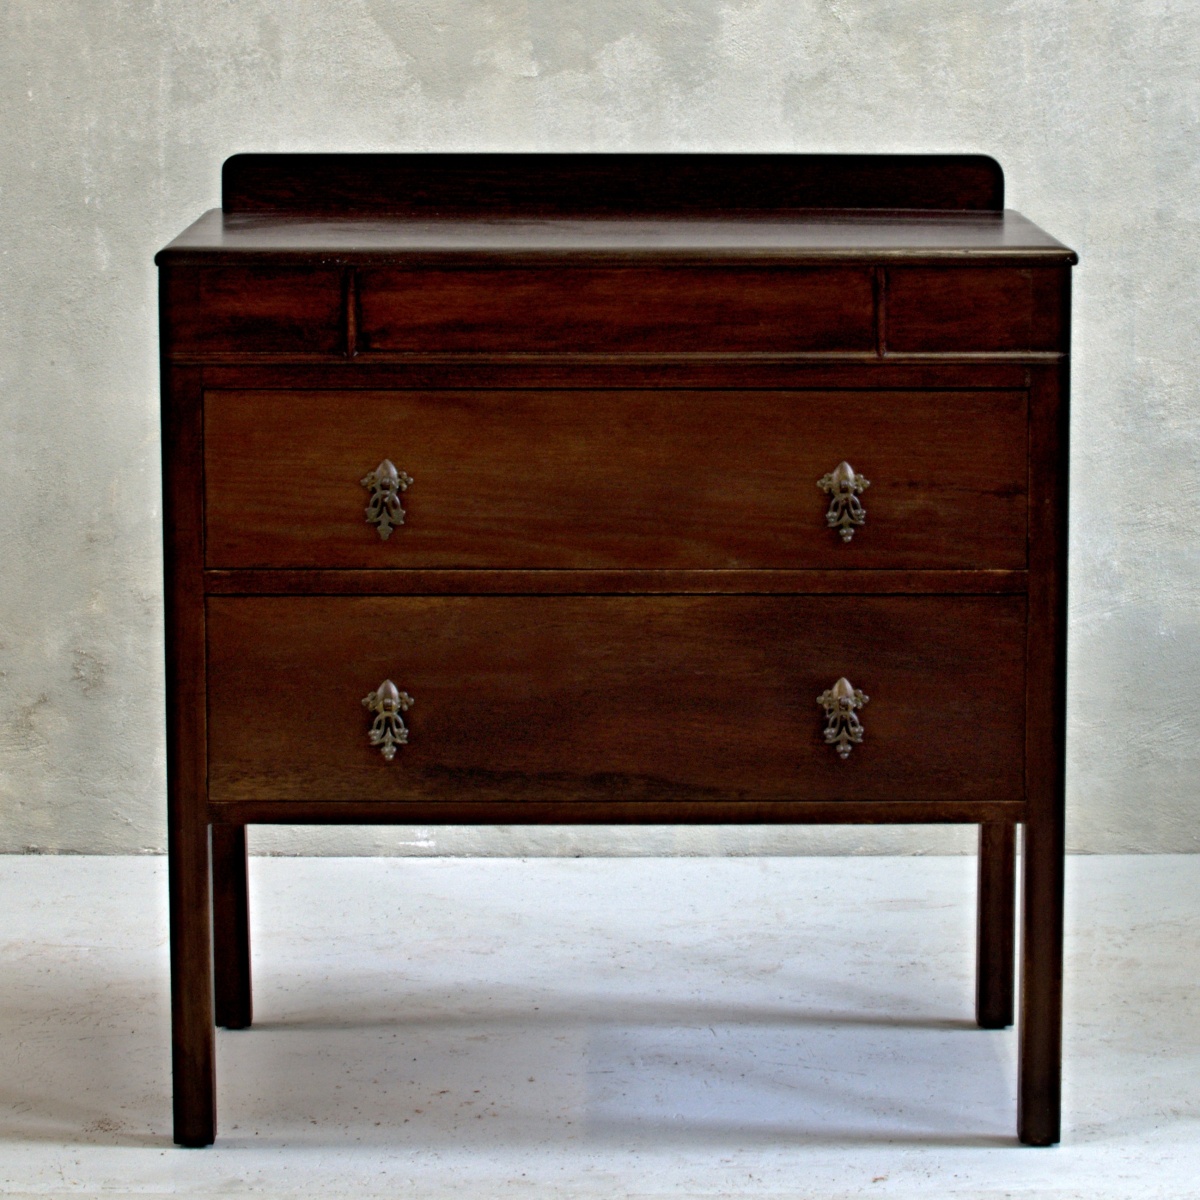 komoda se dvěma šuplíky tmavě hnědá stylový anglický vintage nábytek po celkové renovaci oživeno